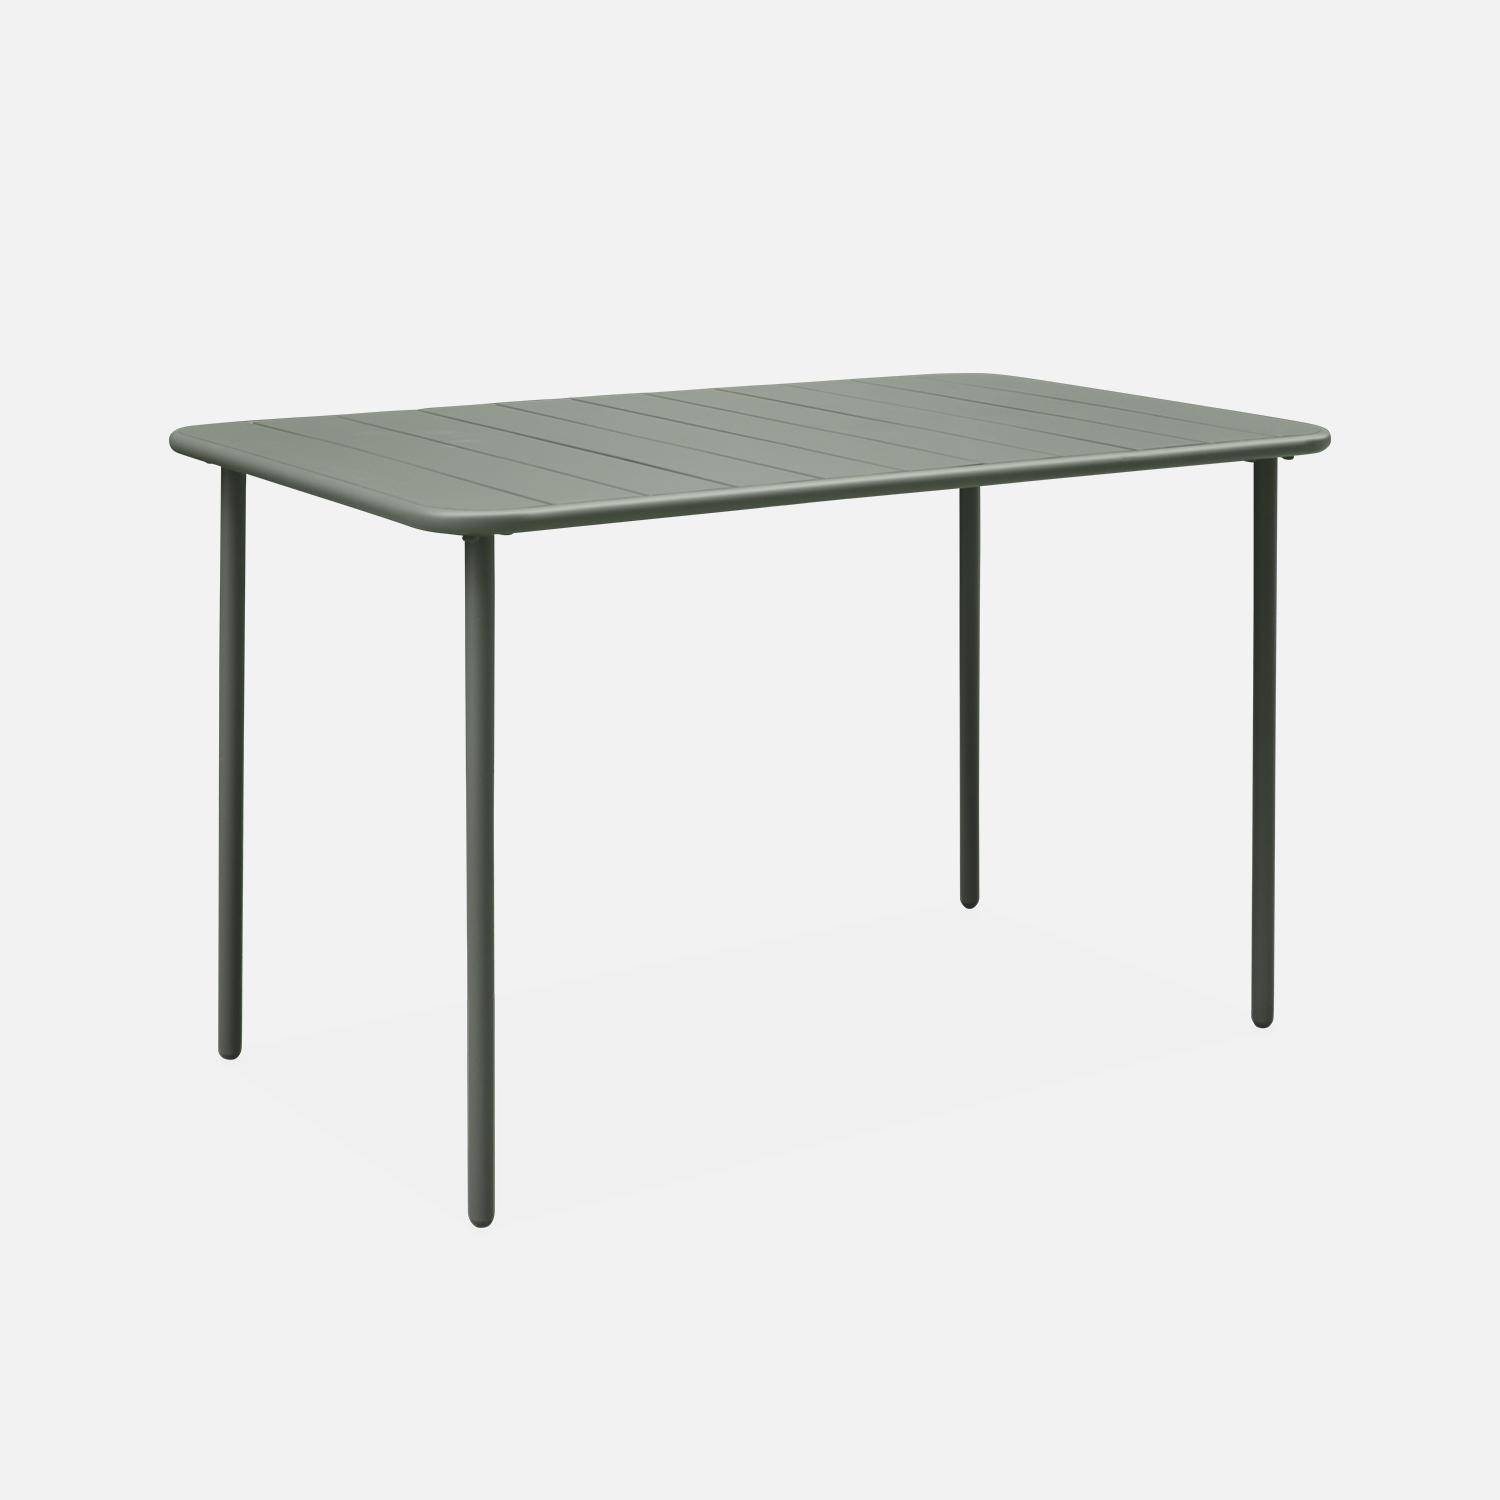 4-seater rectangular steel garden table, 120x70cm - Amelia - Khaki Green Photo3